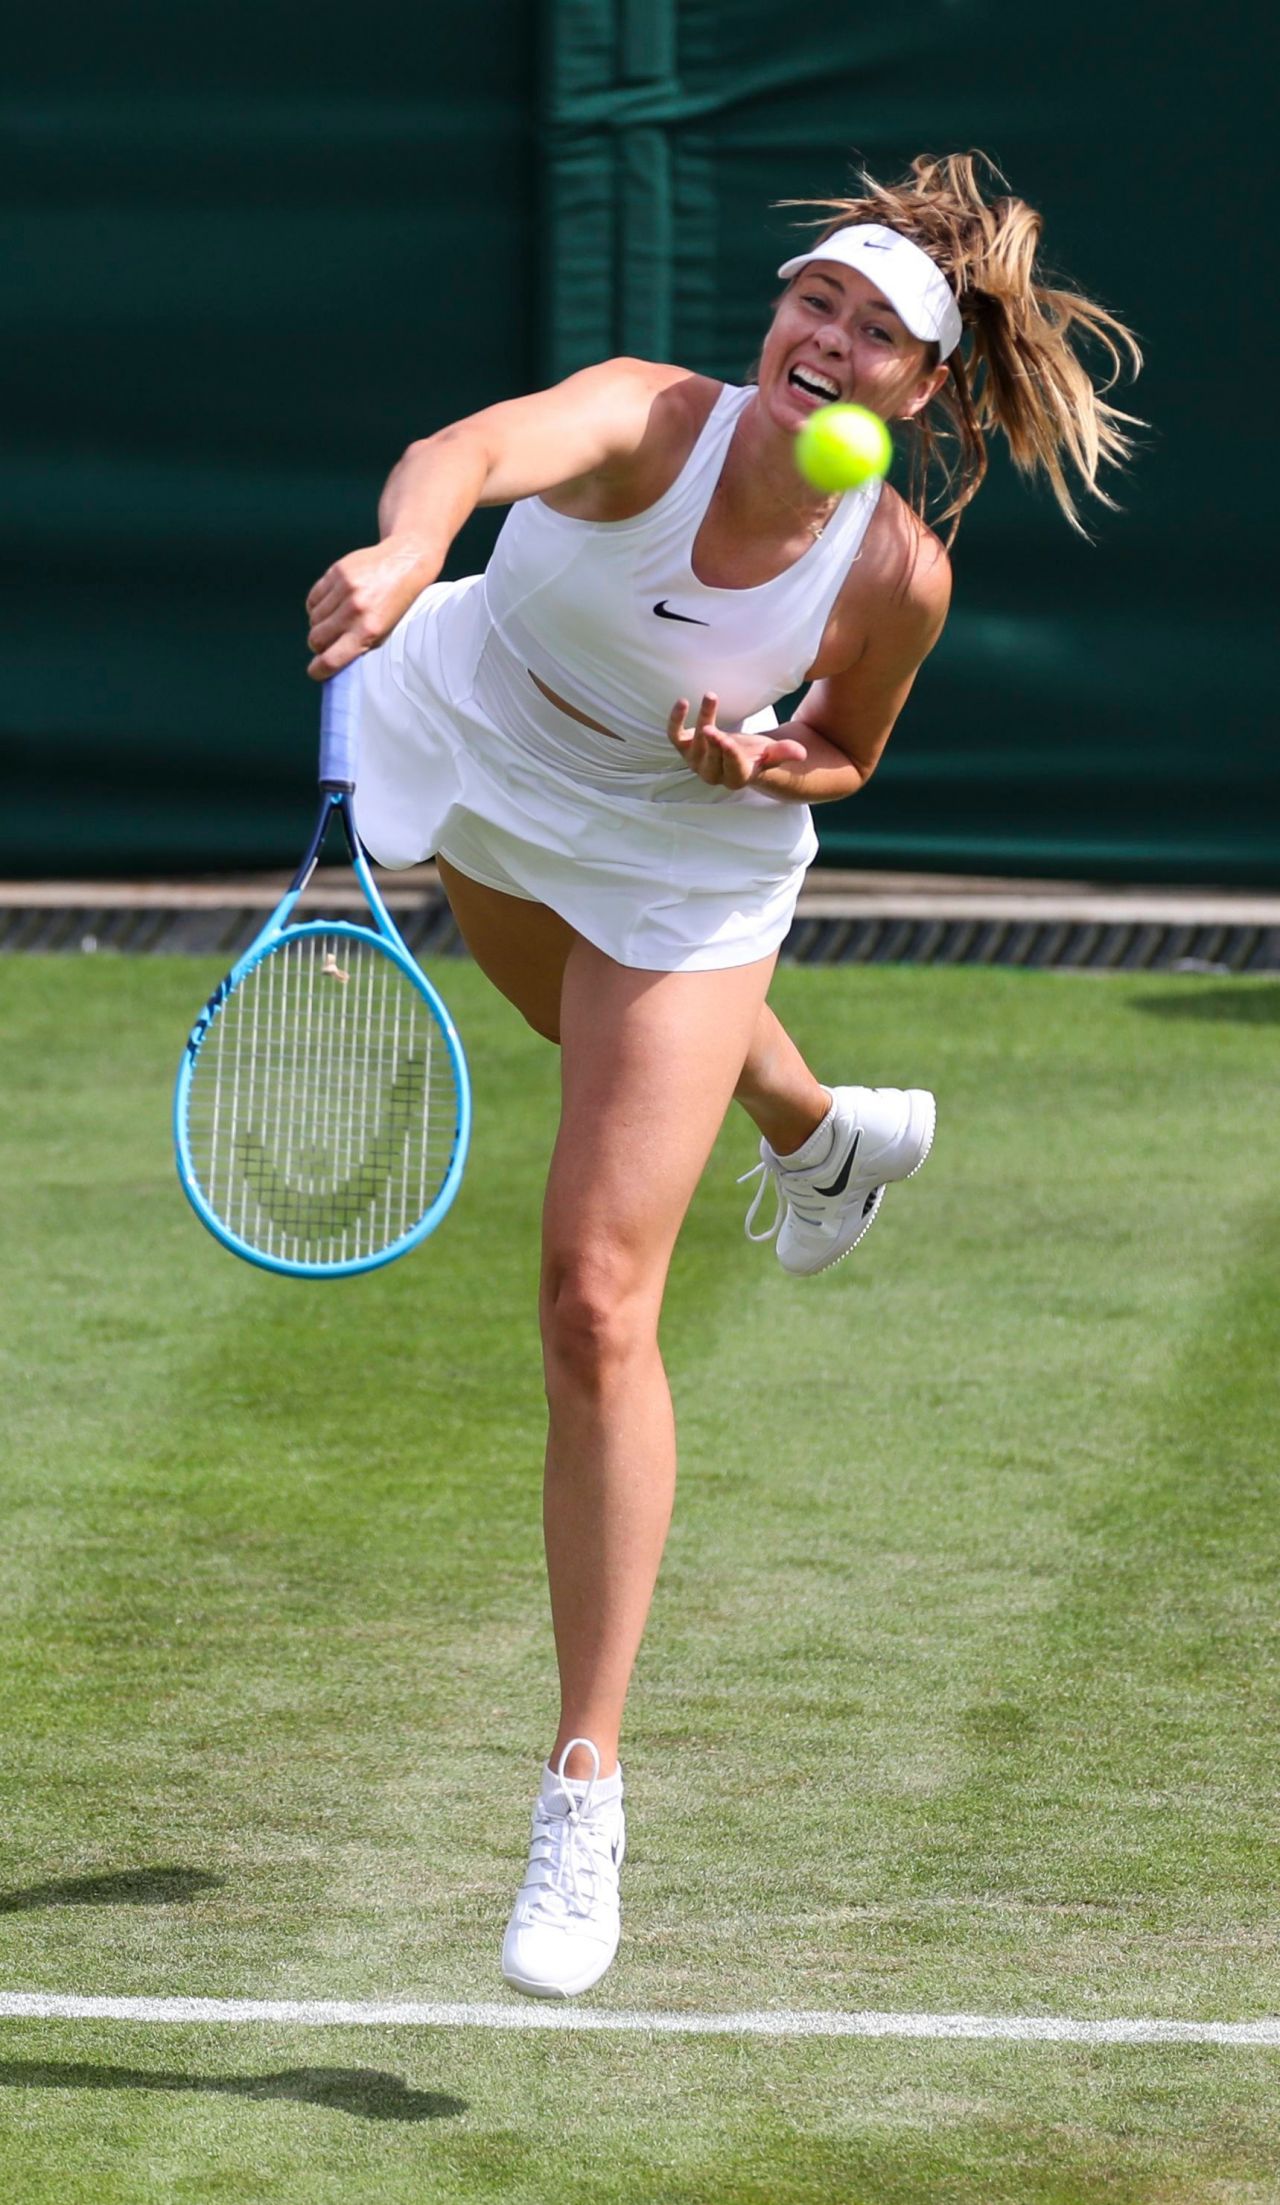 maria-sharapova-wimbledon-tennis-championships-07-02-2019-3.jpg